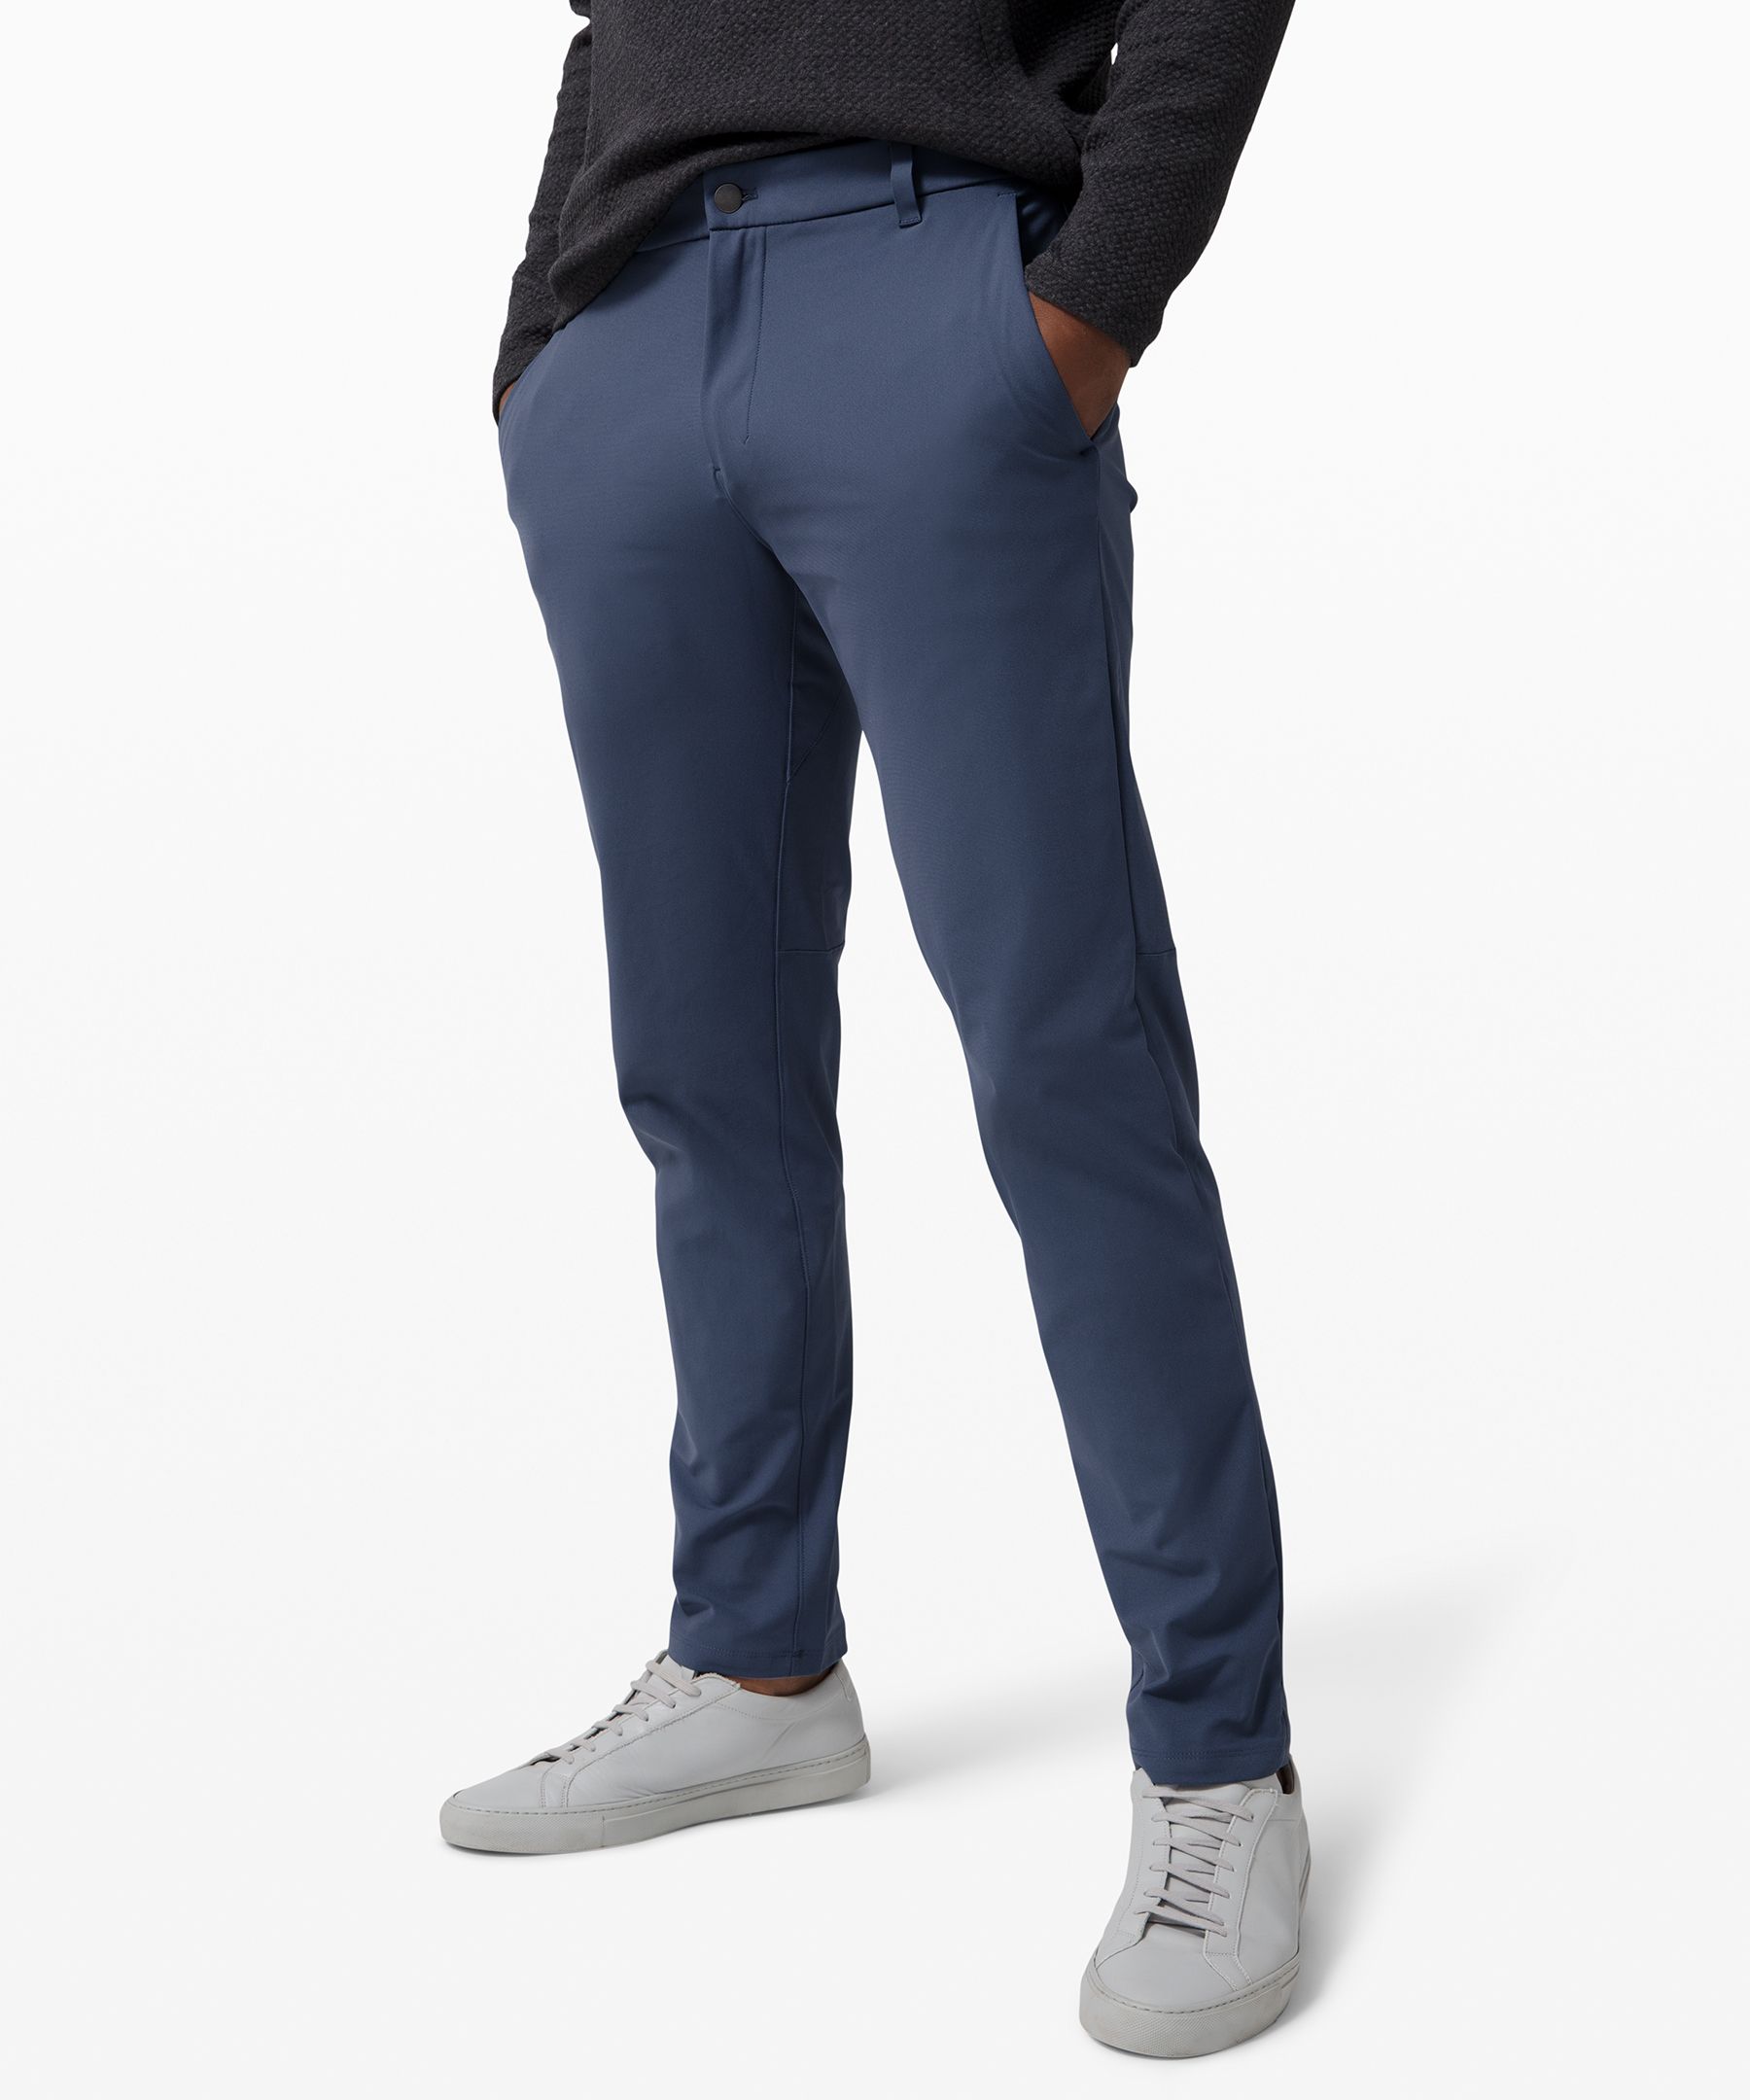 lululemon golf pants mens